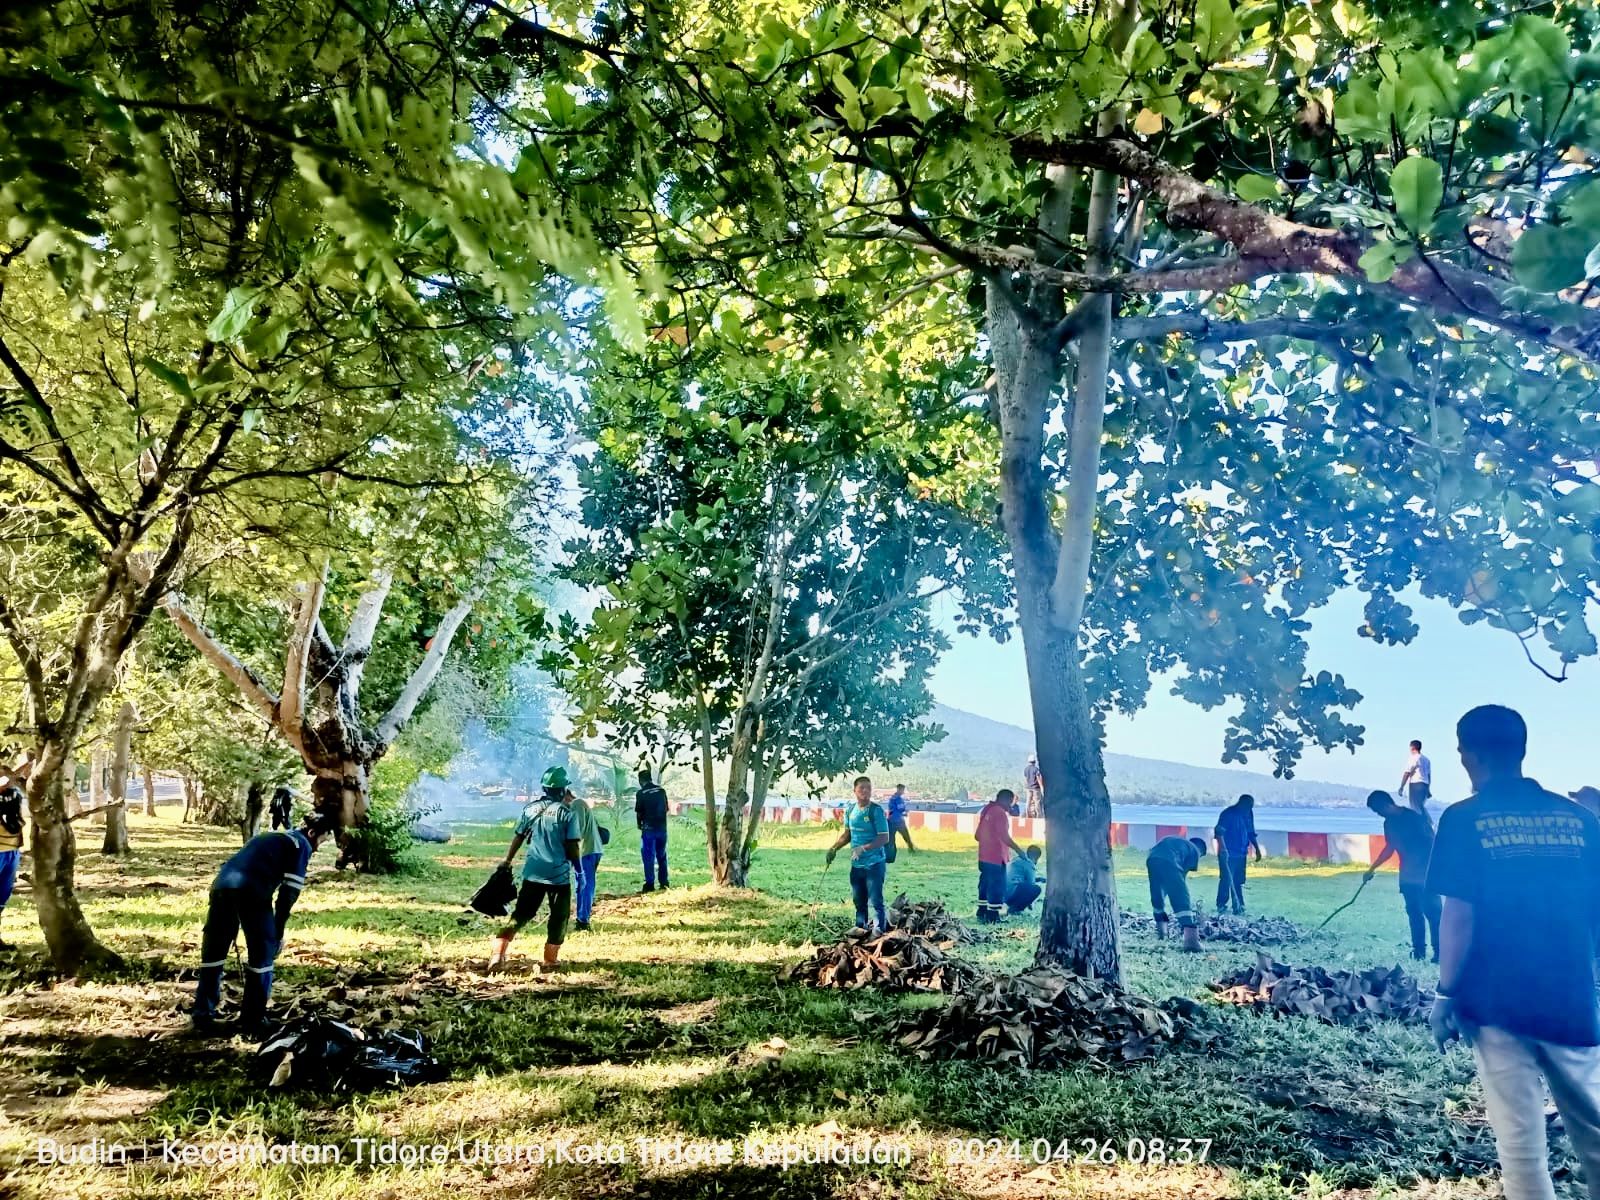 bersama warga setempat, PLTU Tidore bersih-bersih Taman Balibunga di Rum, Kota Tidore Kepulauan